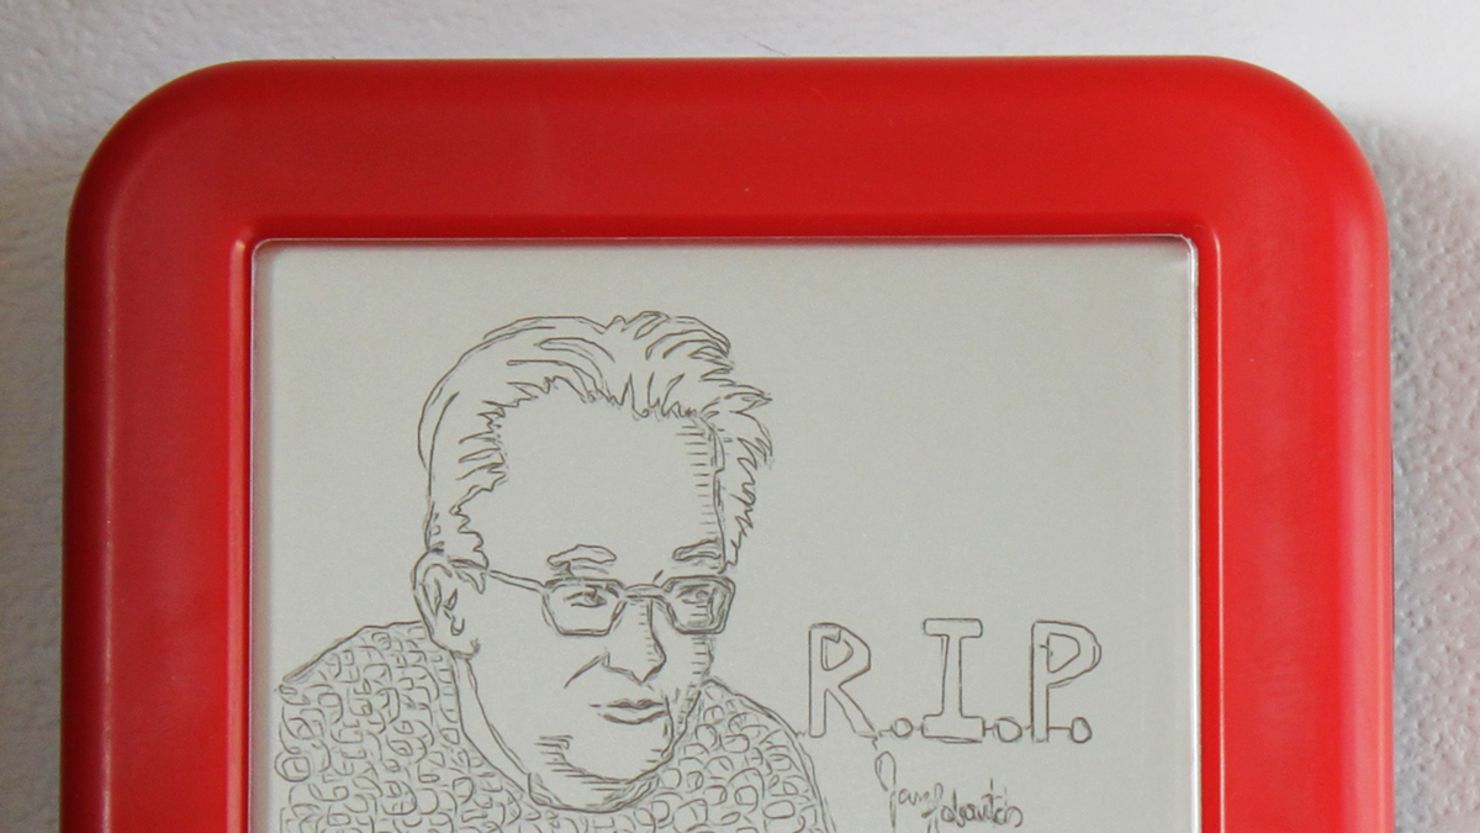 Etch A Sketch creator Andre Cassagnes dies